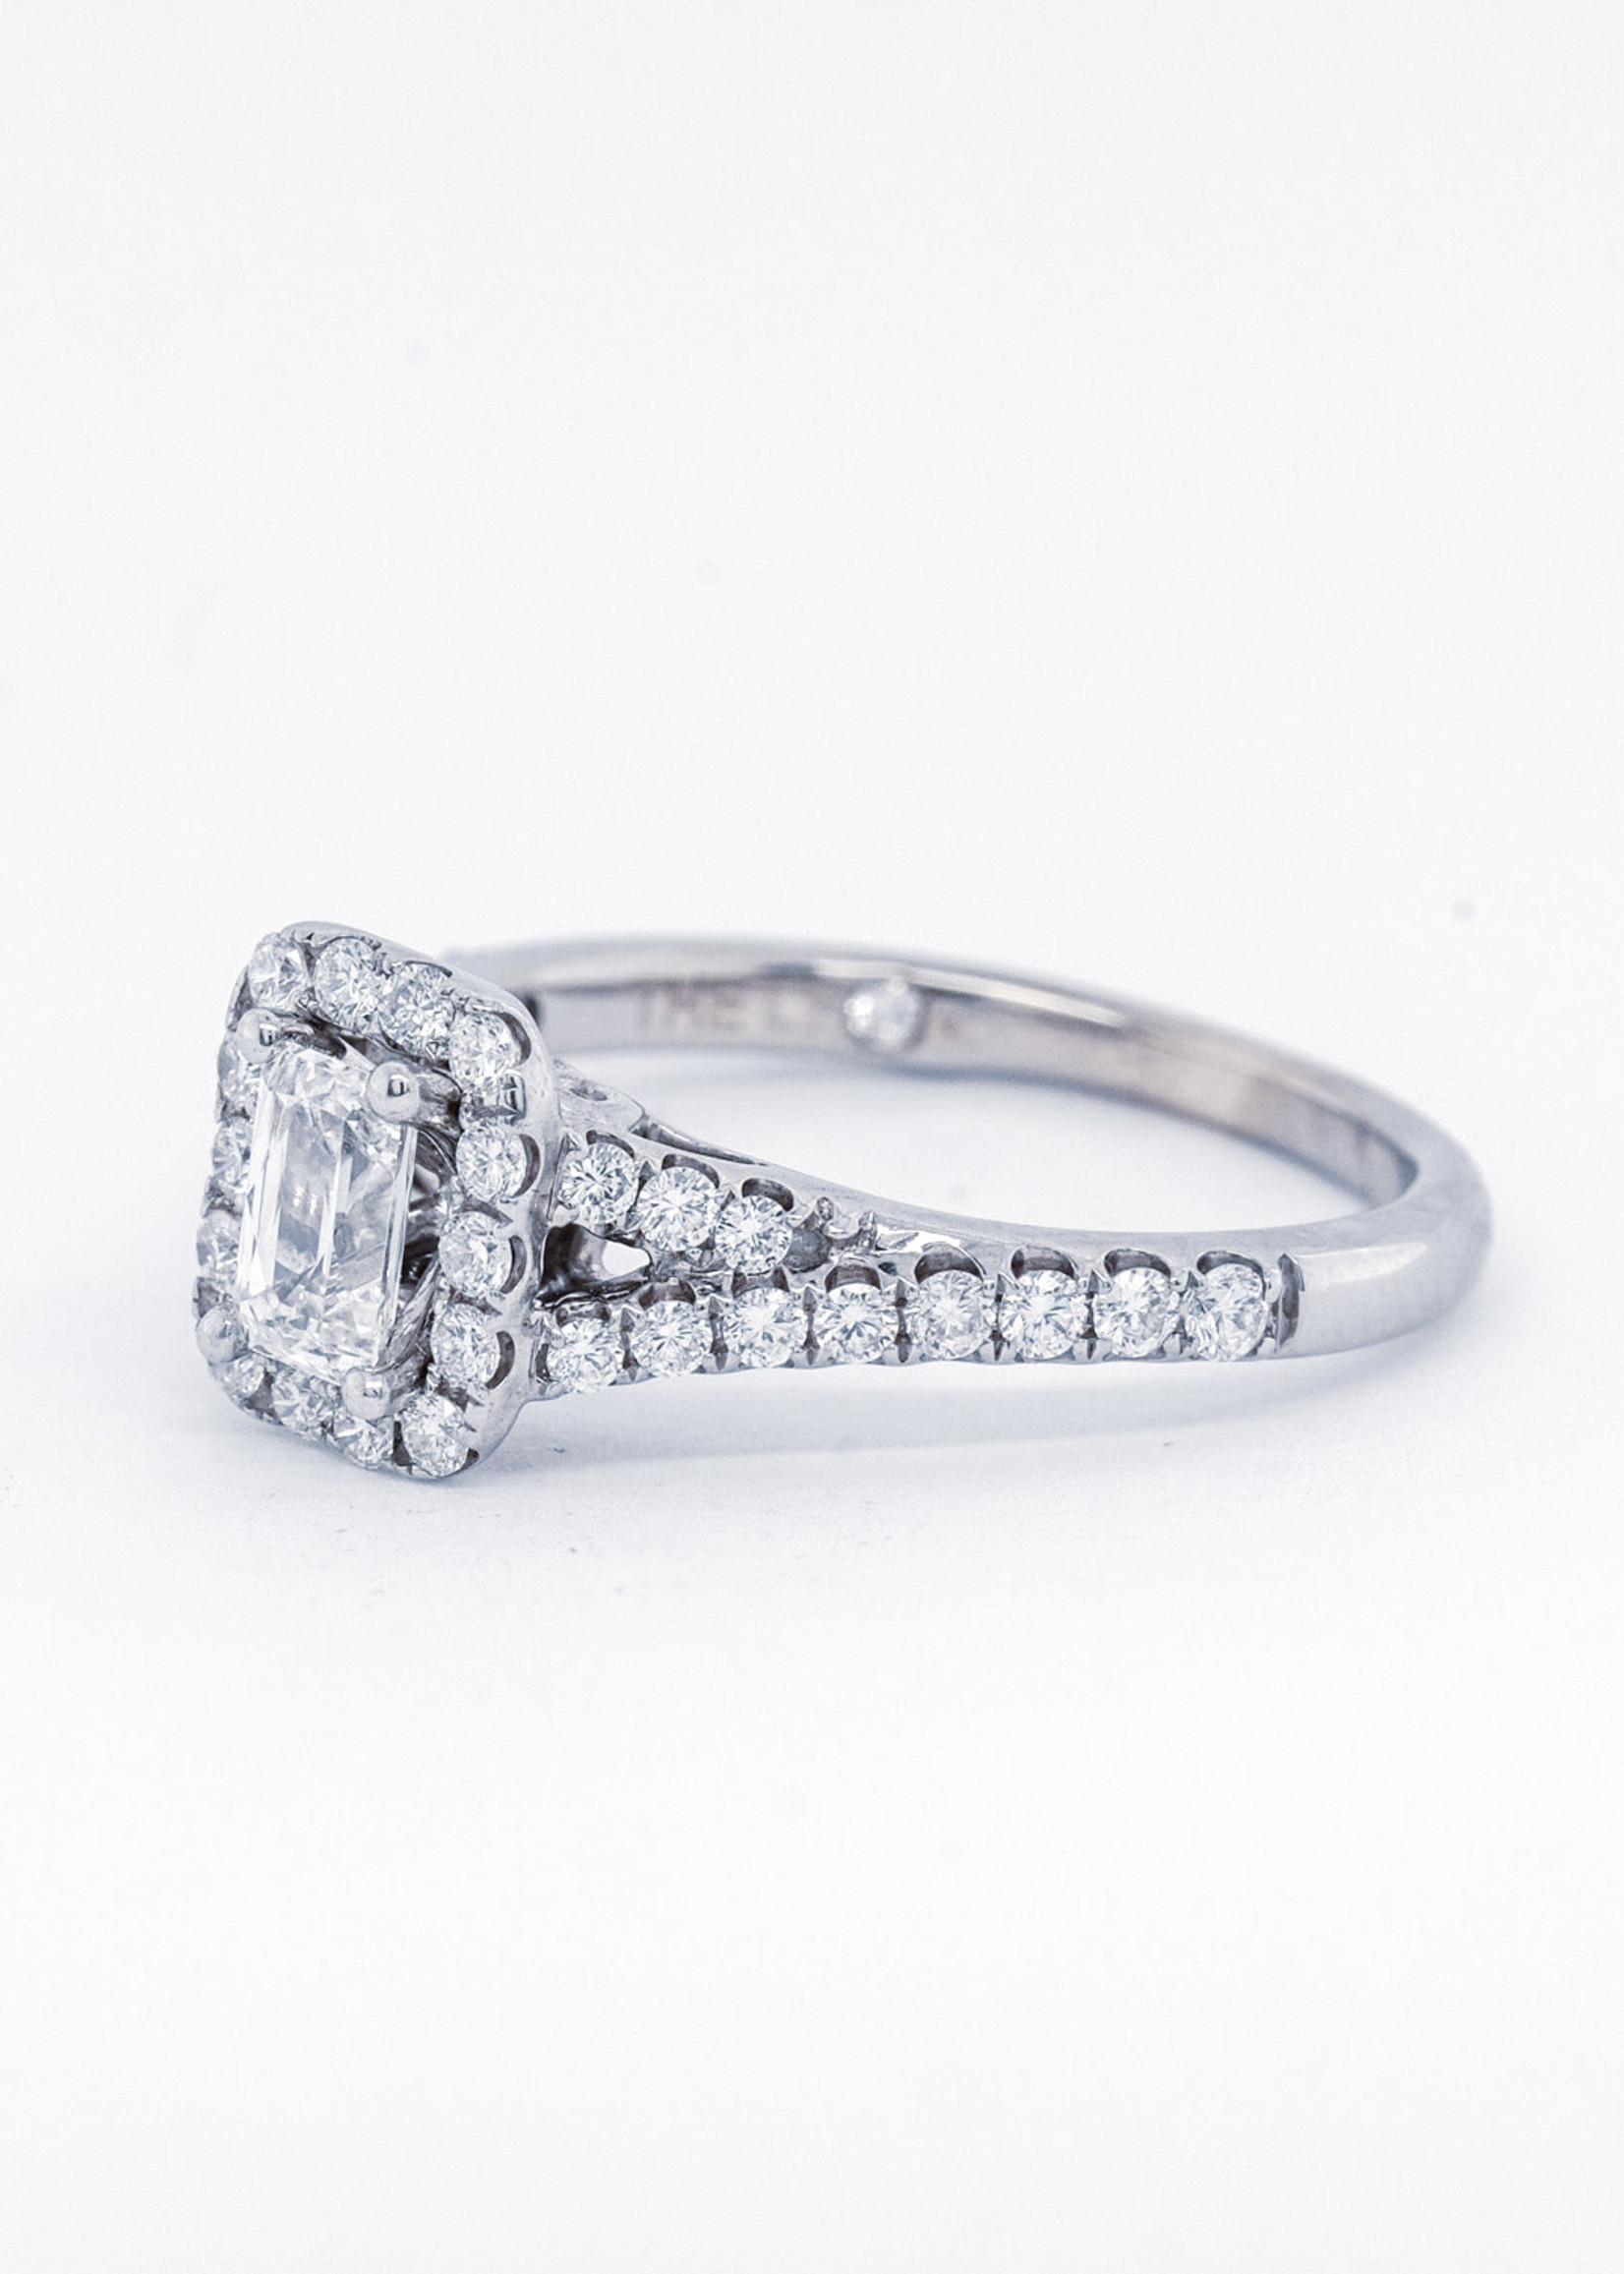 14KW 4.07g 1.25ctw (.47ctr) F/VS2 Emerald Cut Leo Diamond Halo Engagement Ring (6.75)